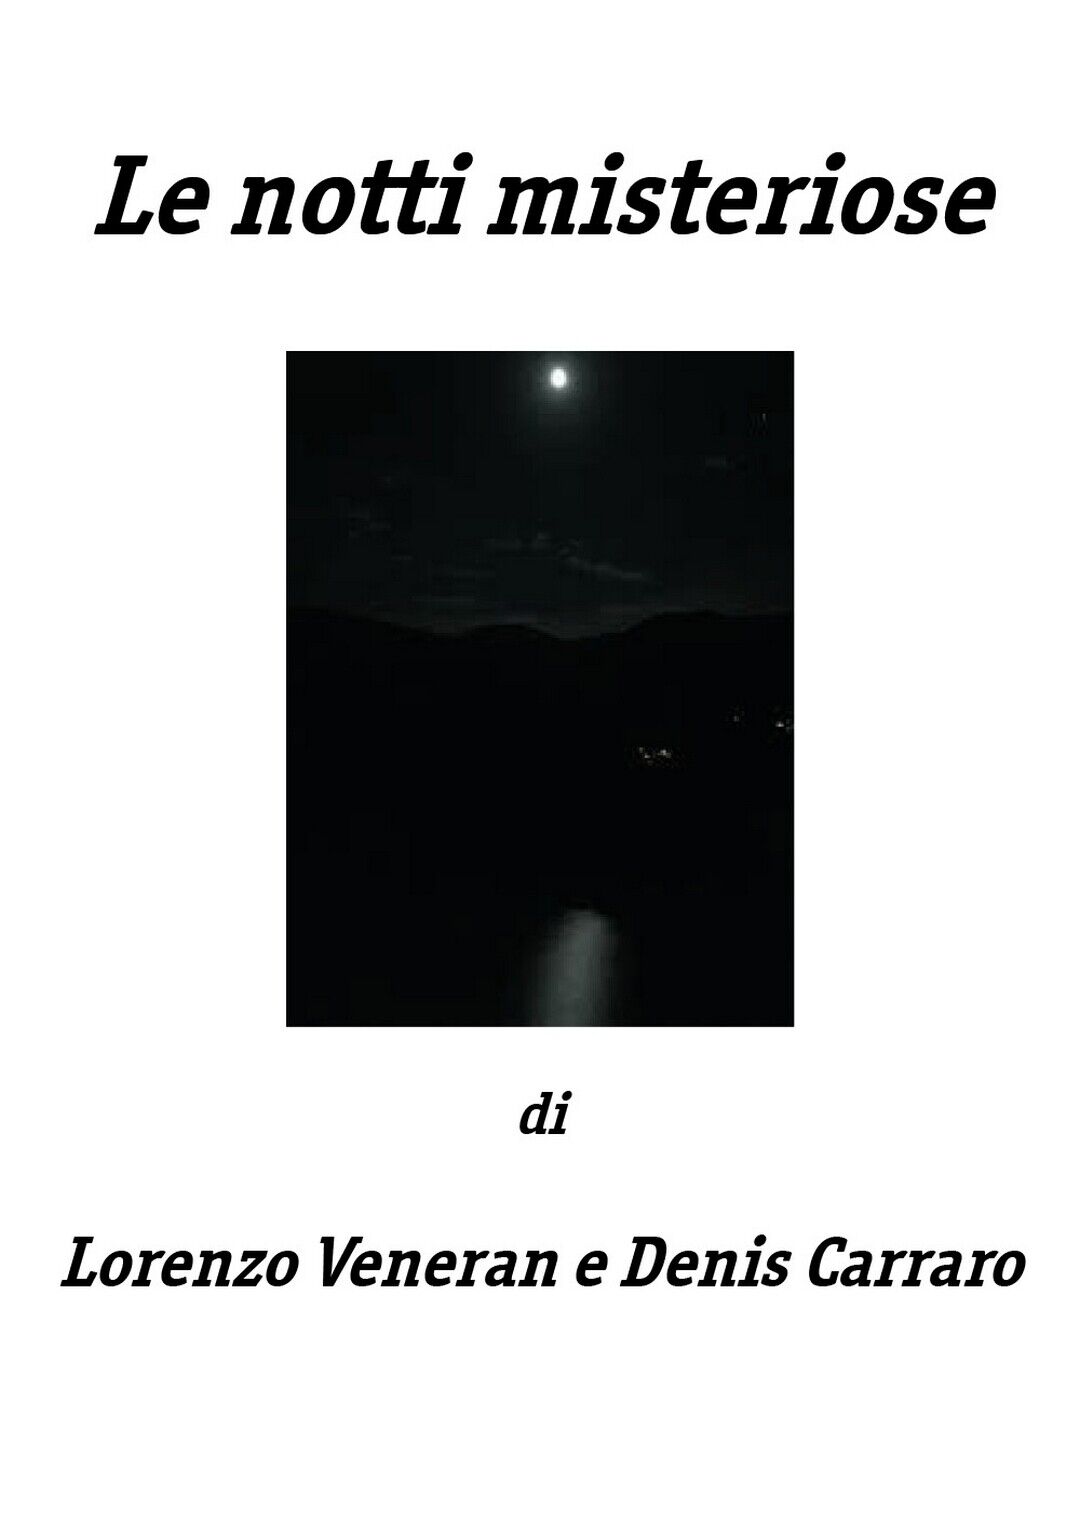 Le notti misteriose  di Denis Carraro, Lorenzo Veneran,  2018,  Youcanprint